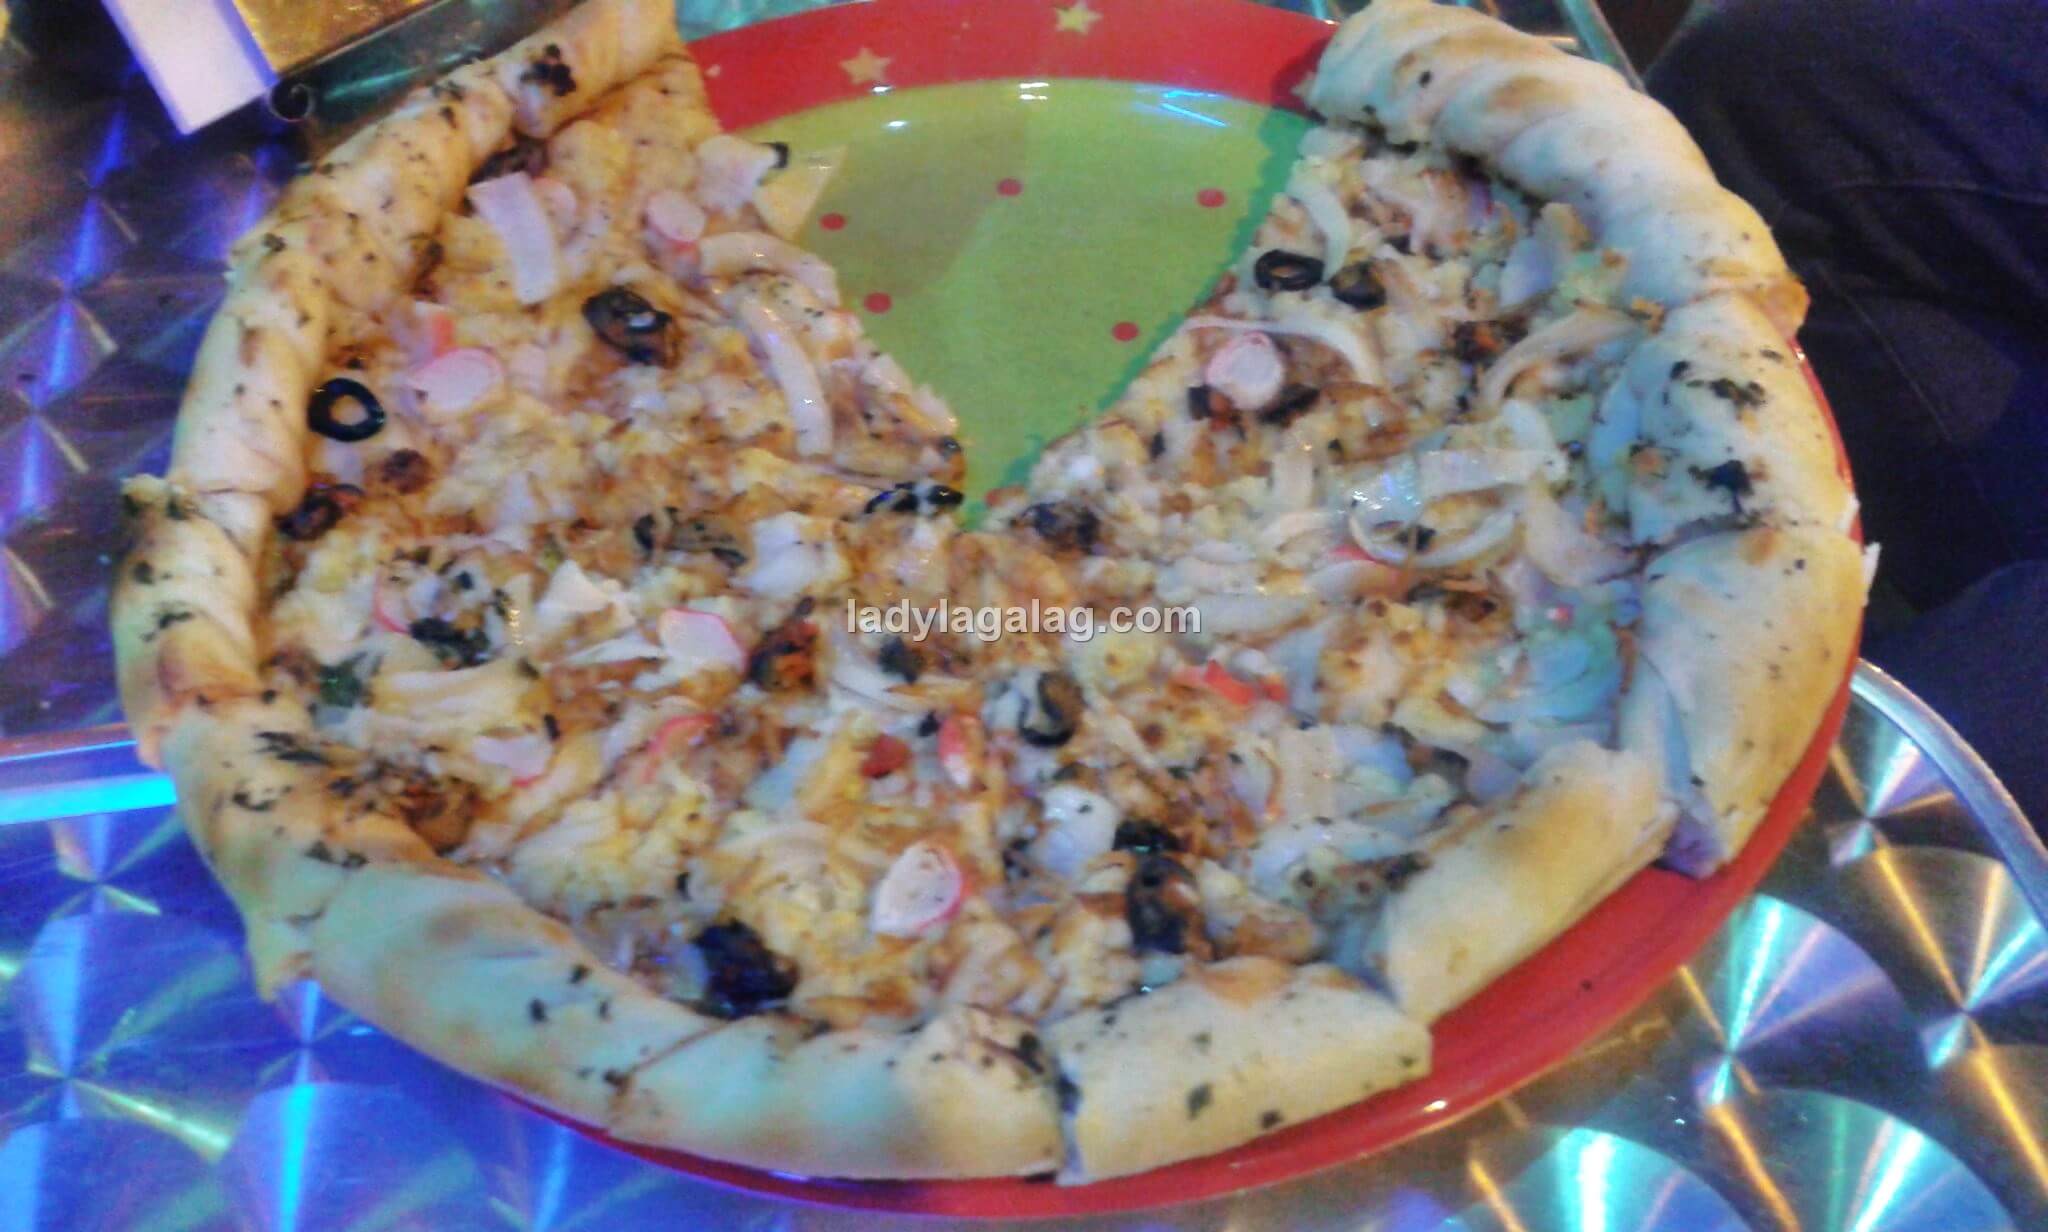 This pizza shop in Mandaluyong has Marinara flavor